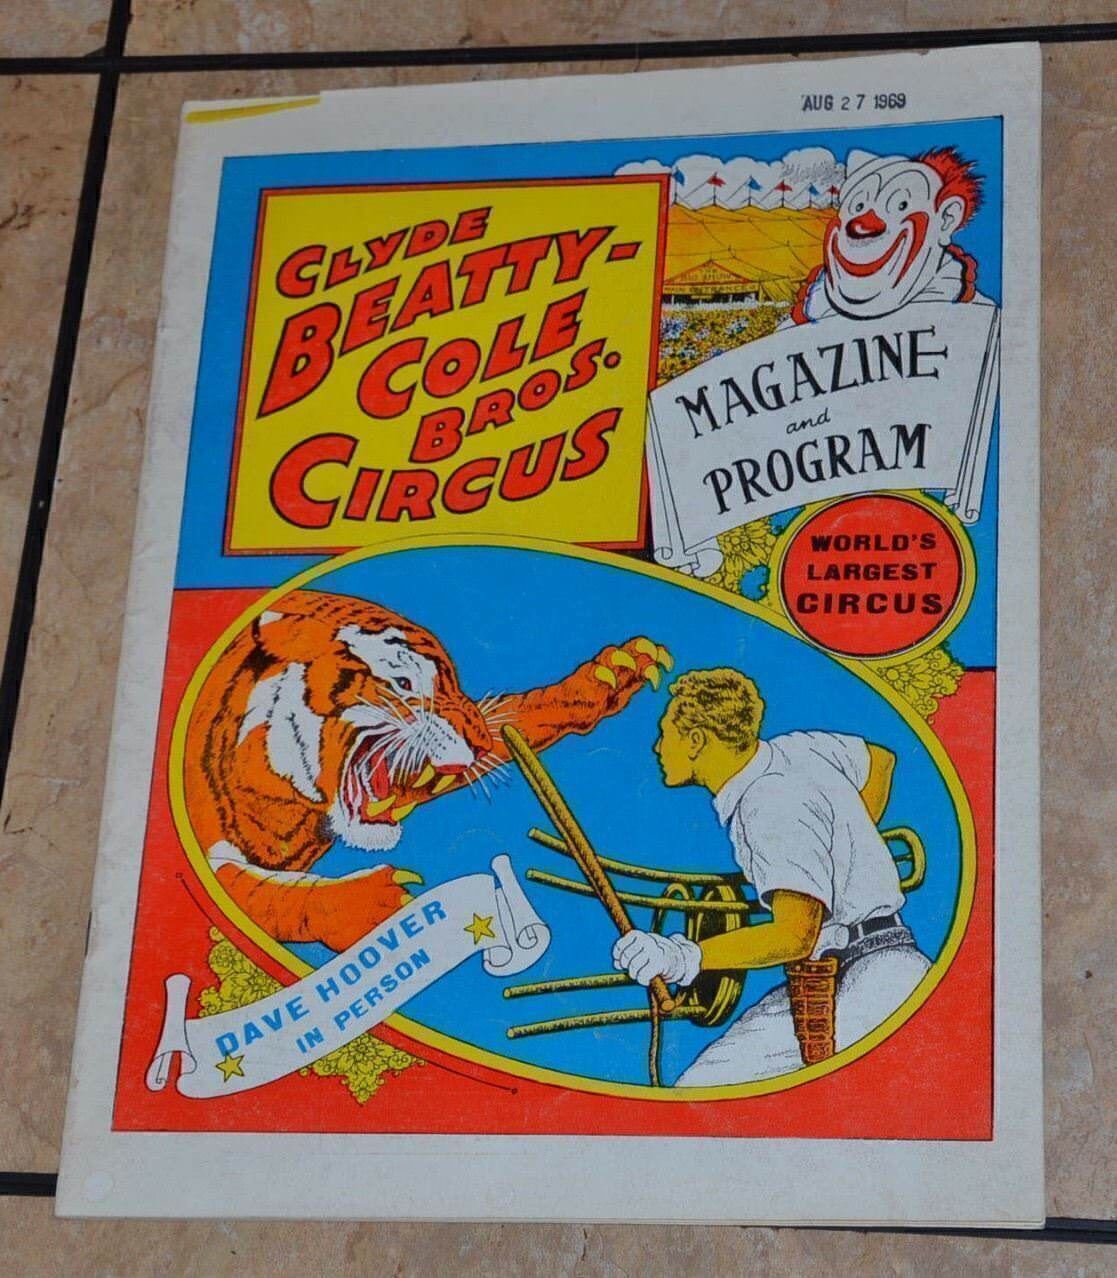 Circus Program + Magazine  Clyde Beatty Cole Bros Circus 1969 David Hoover FL